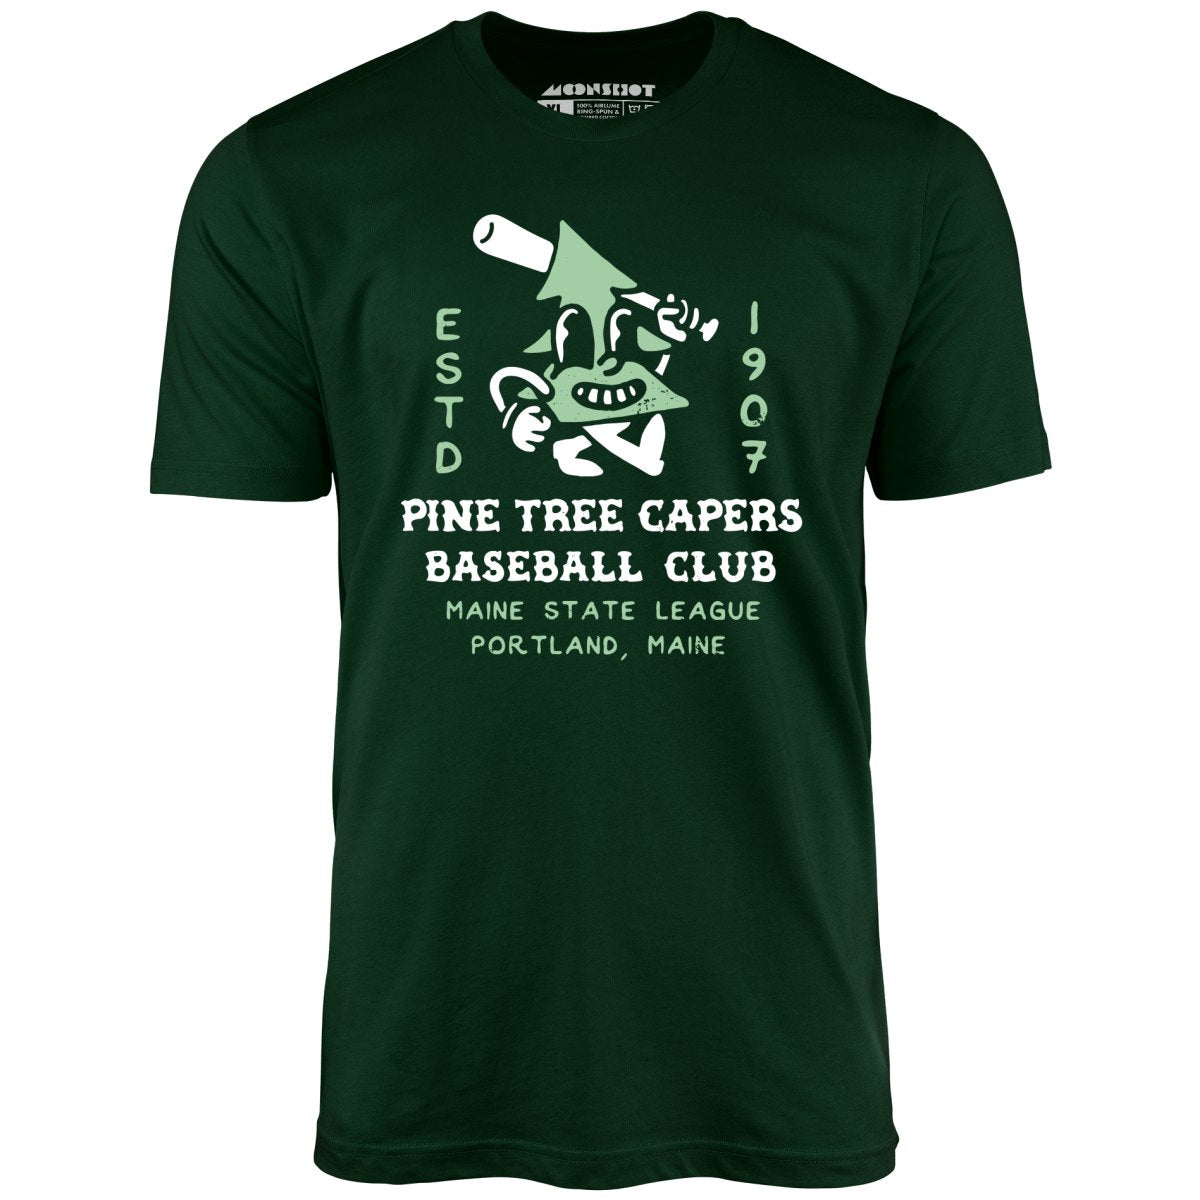 Pine Tree Capers - Portland, ME - Vintage Defunct Baseball Teams - Unisex T-Shirt